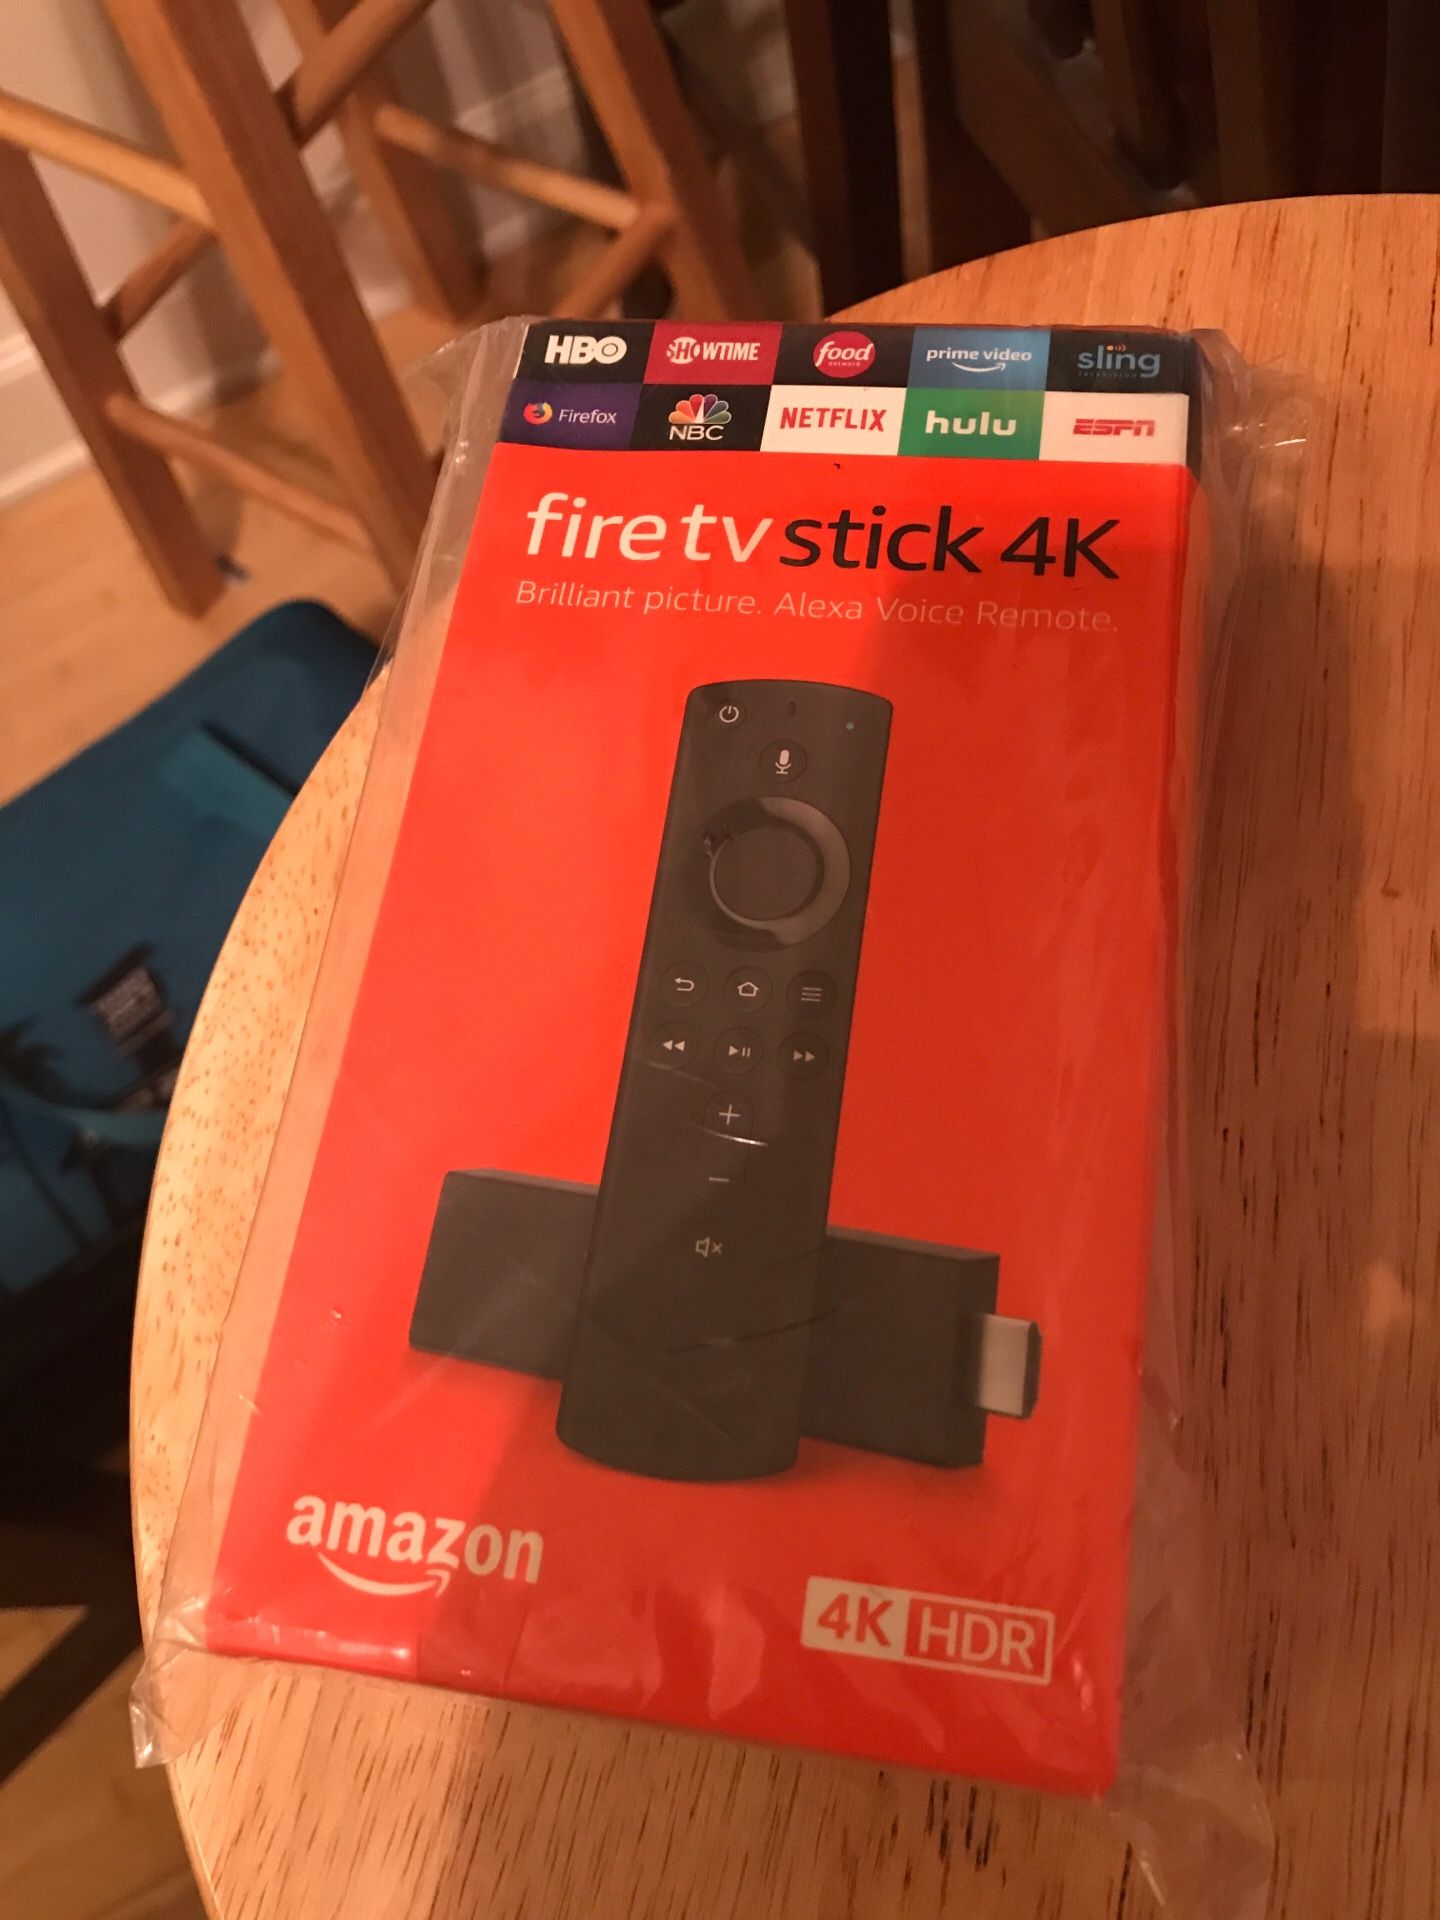 Amazon Fire TV stick 4K- turn your “dumb” TV smart!